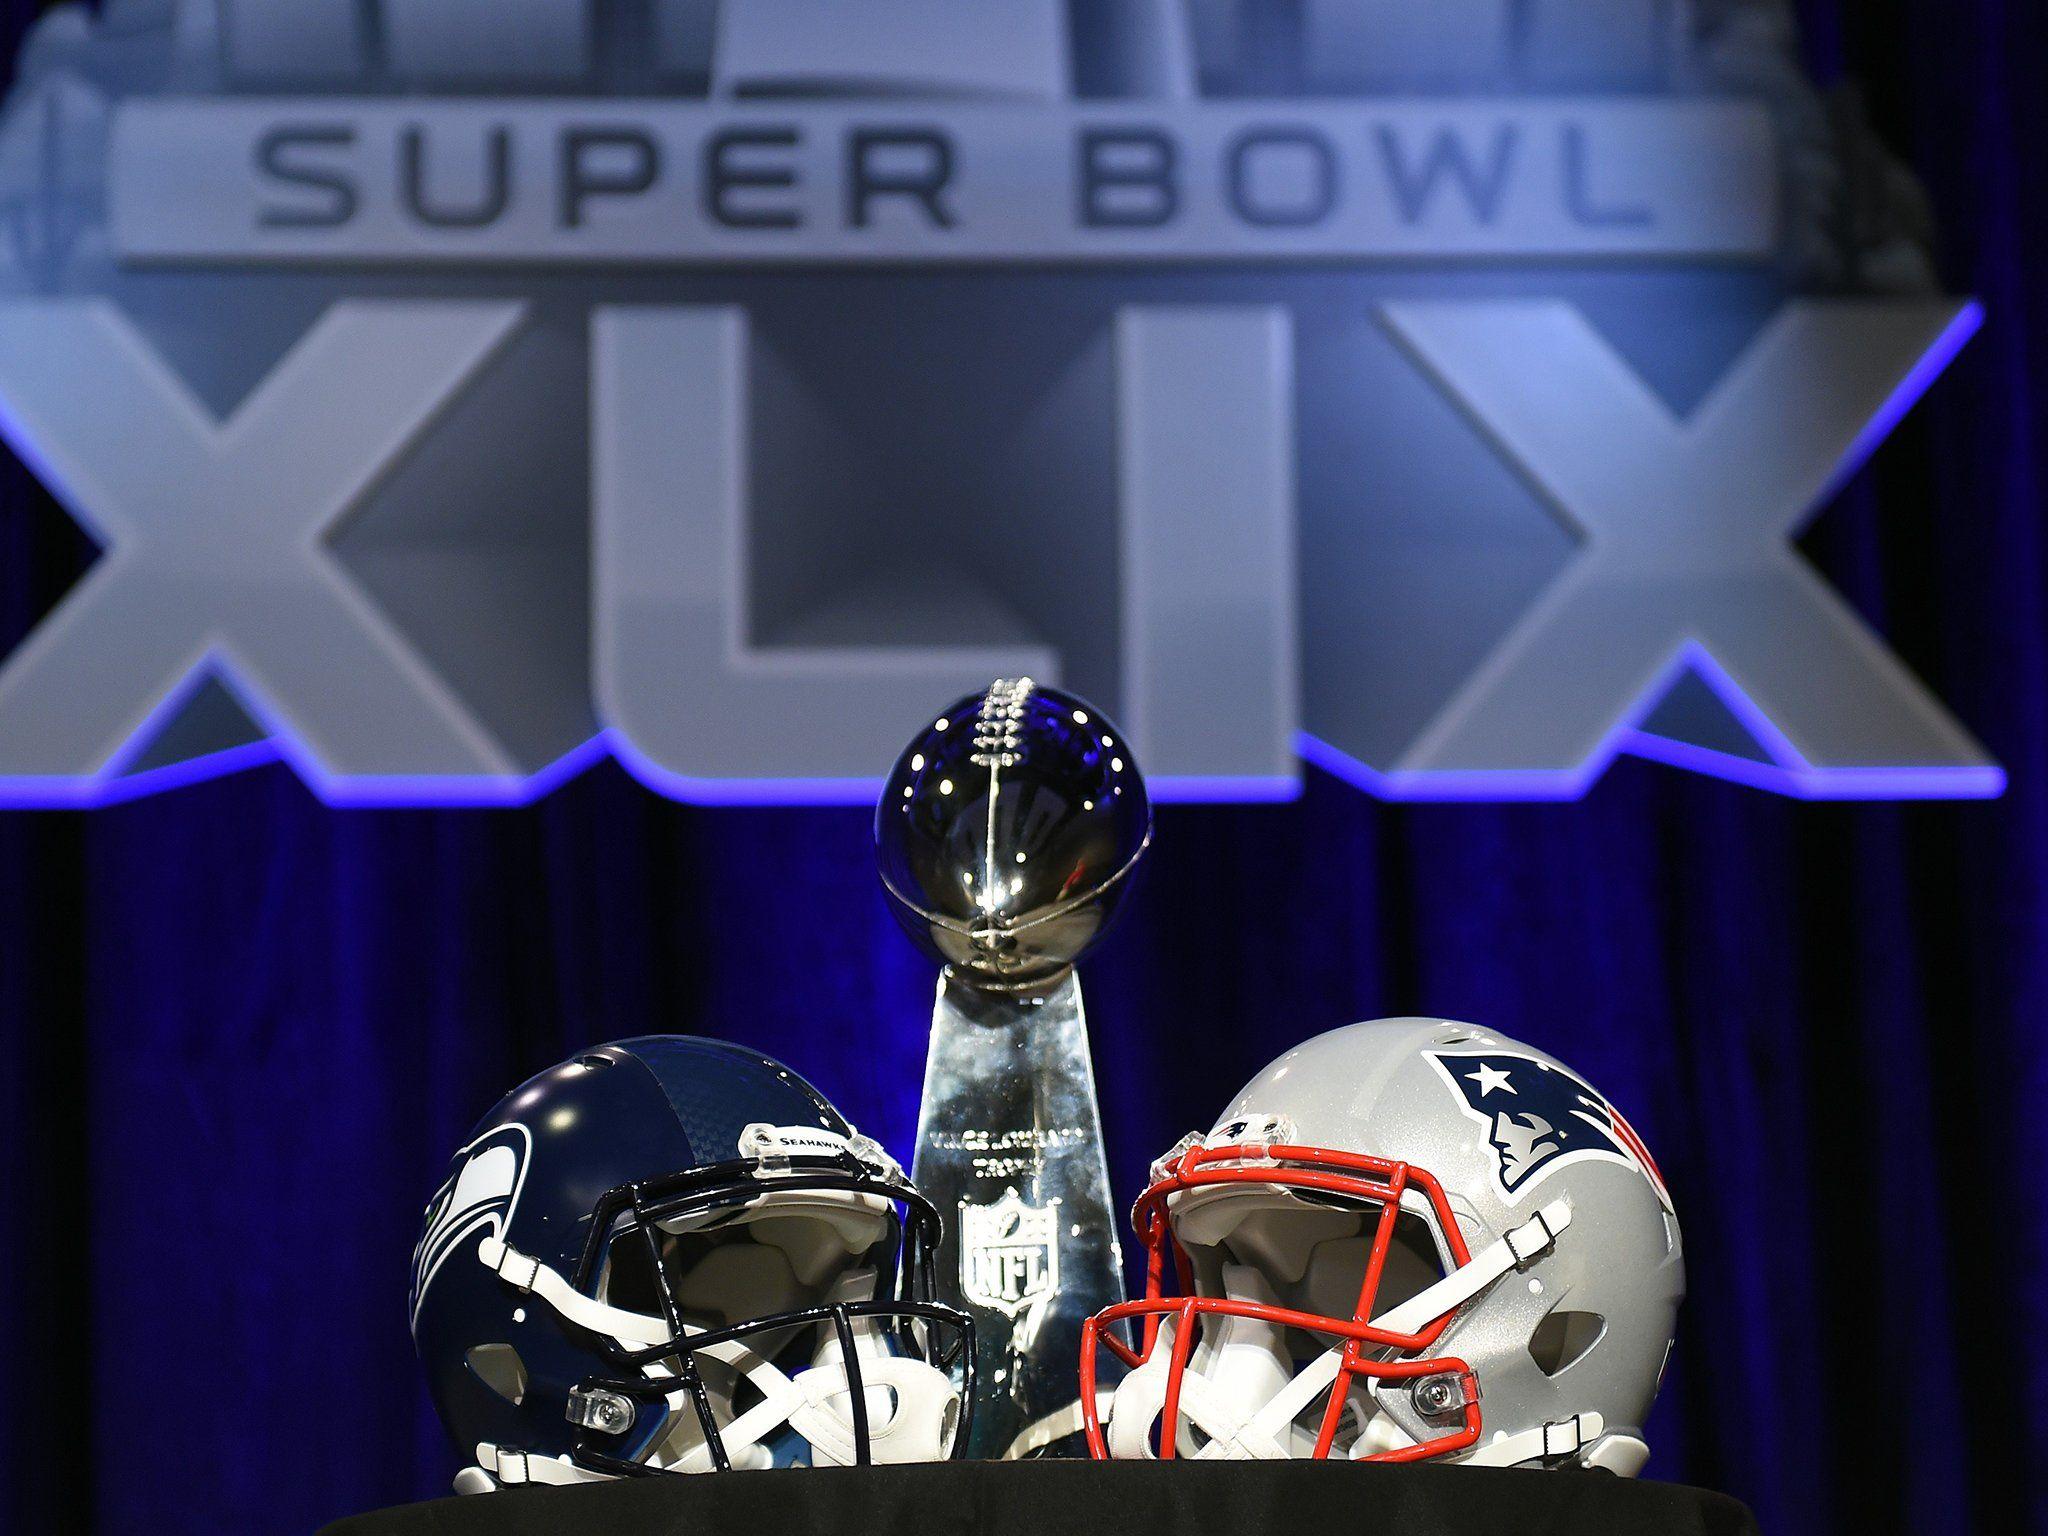 Super Bowl 2015: NFL Season Of Disgrace, Involving Cover Ups